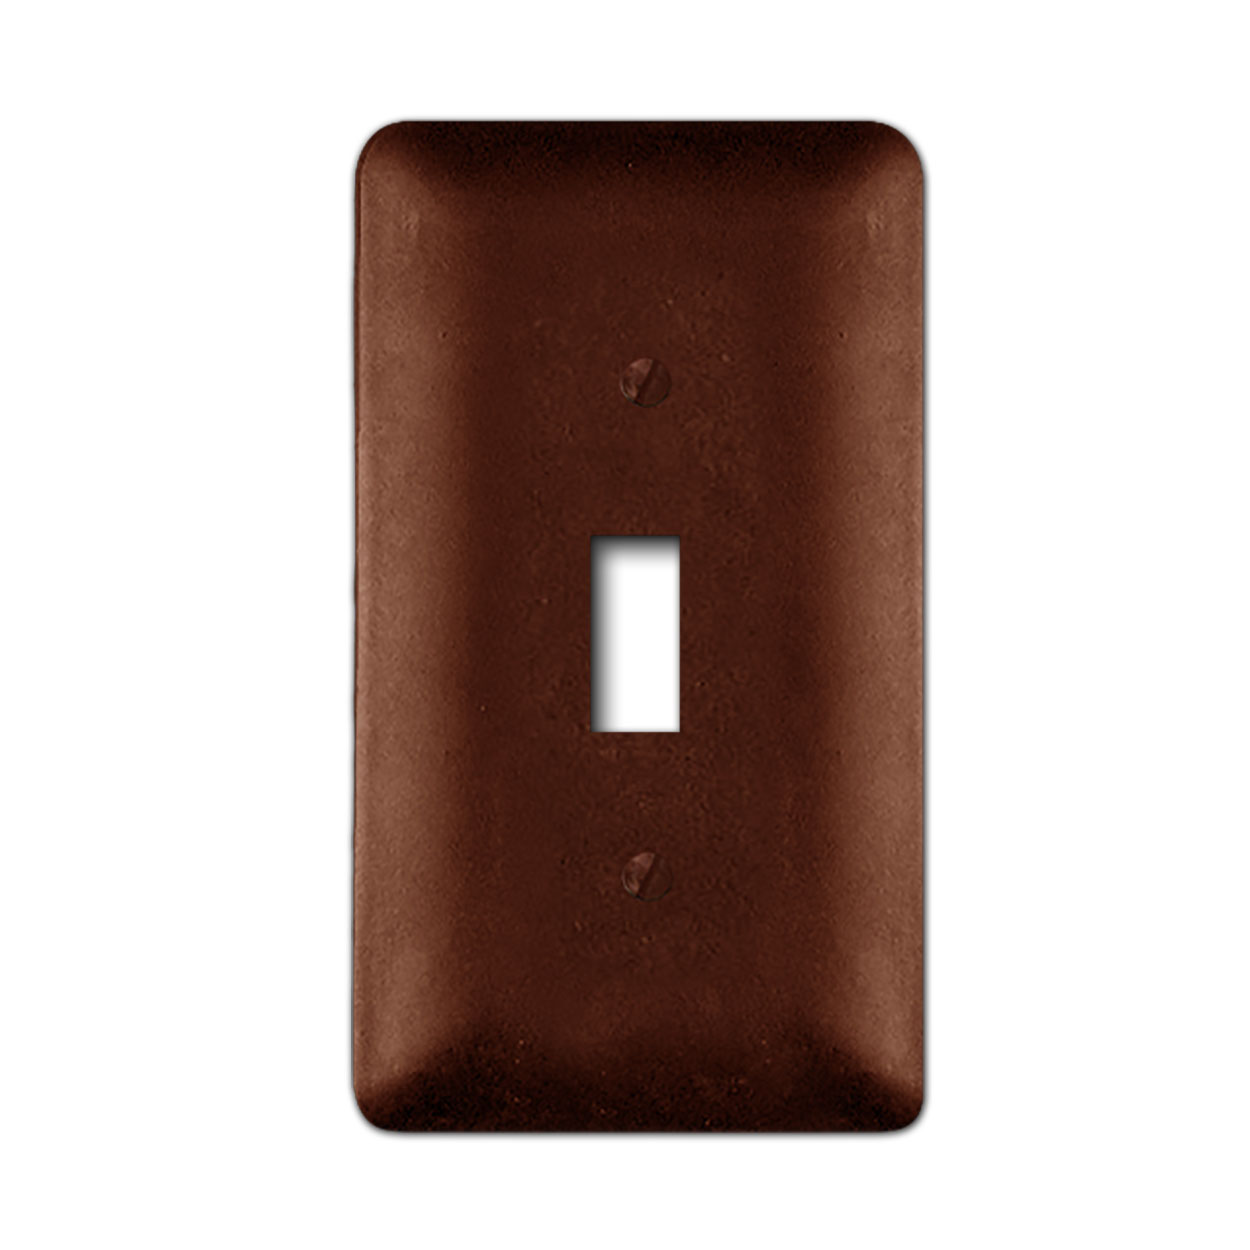 182284RT - Rust Brown Metal Wall Plate - Plain - Standard Switch - Single